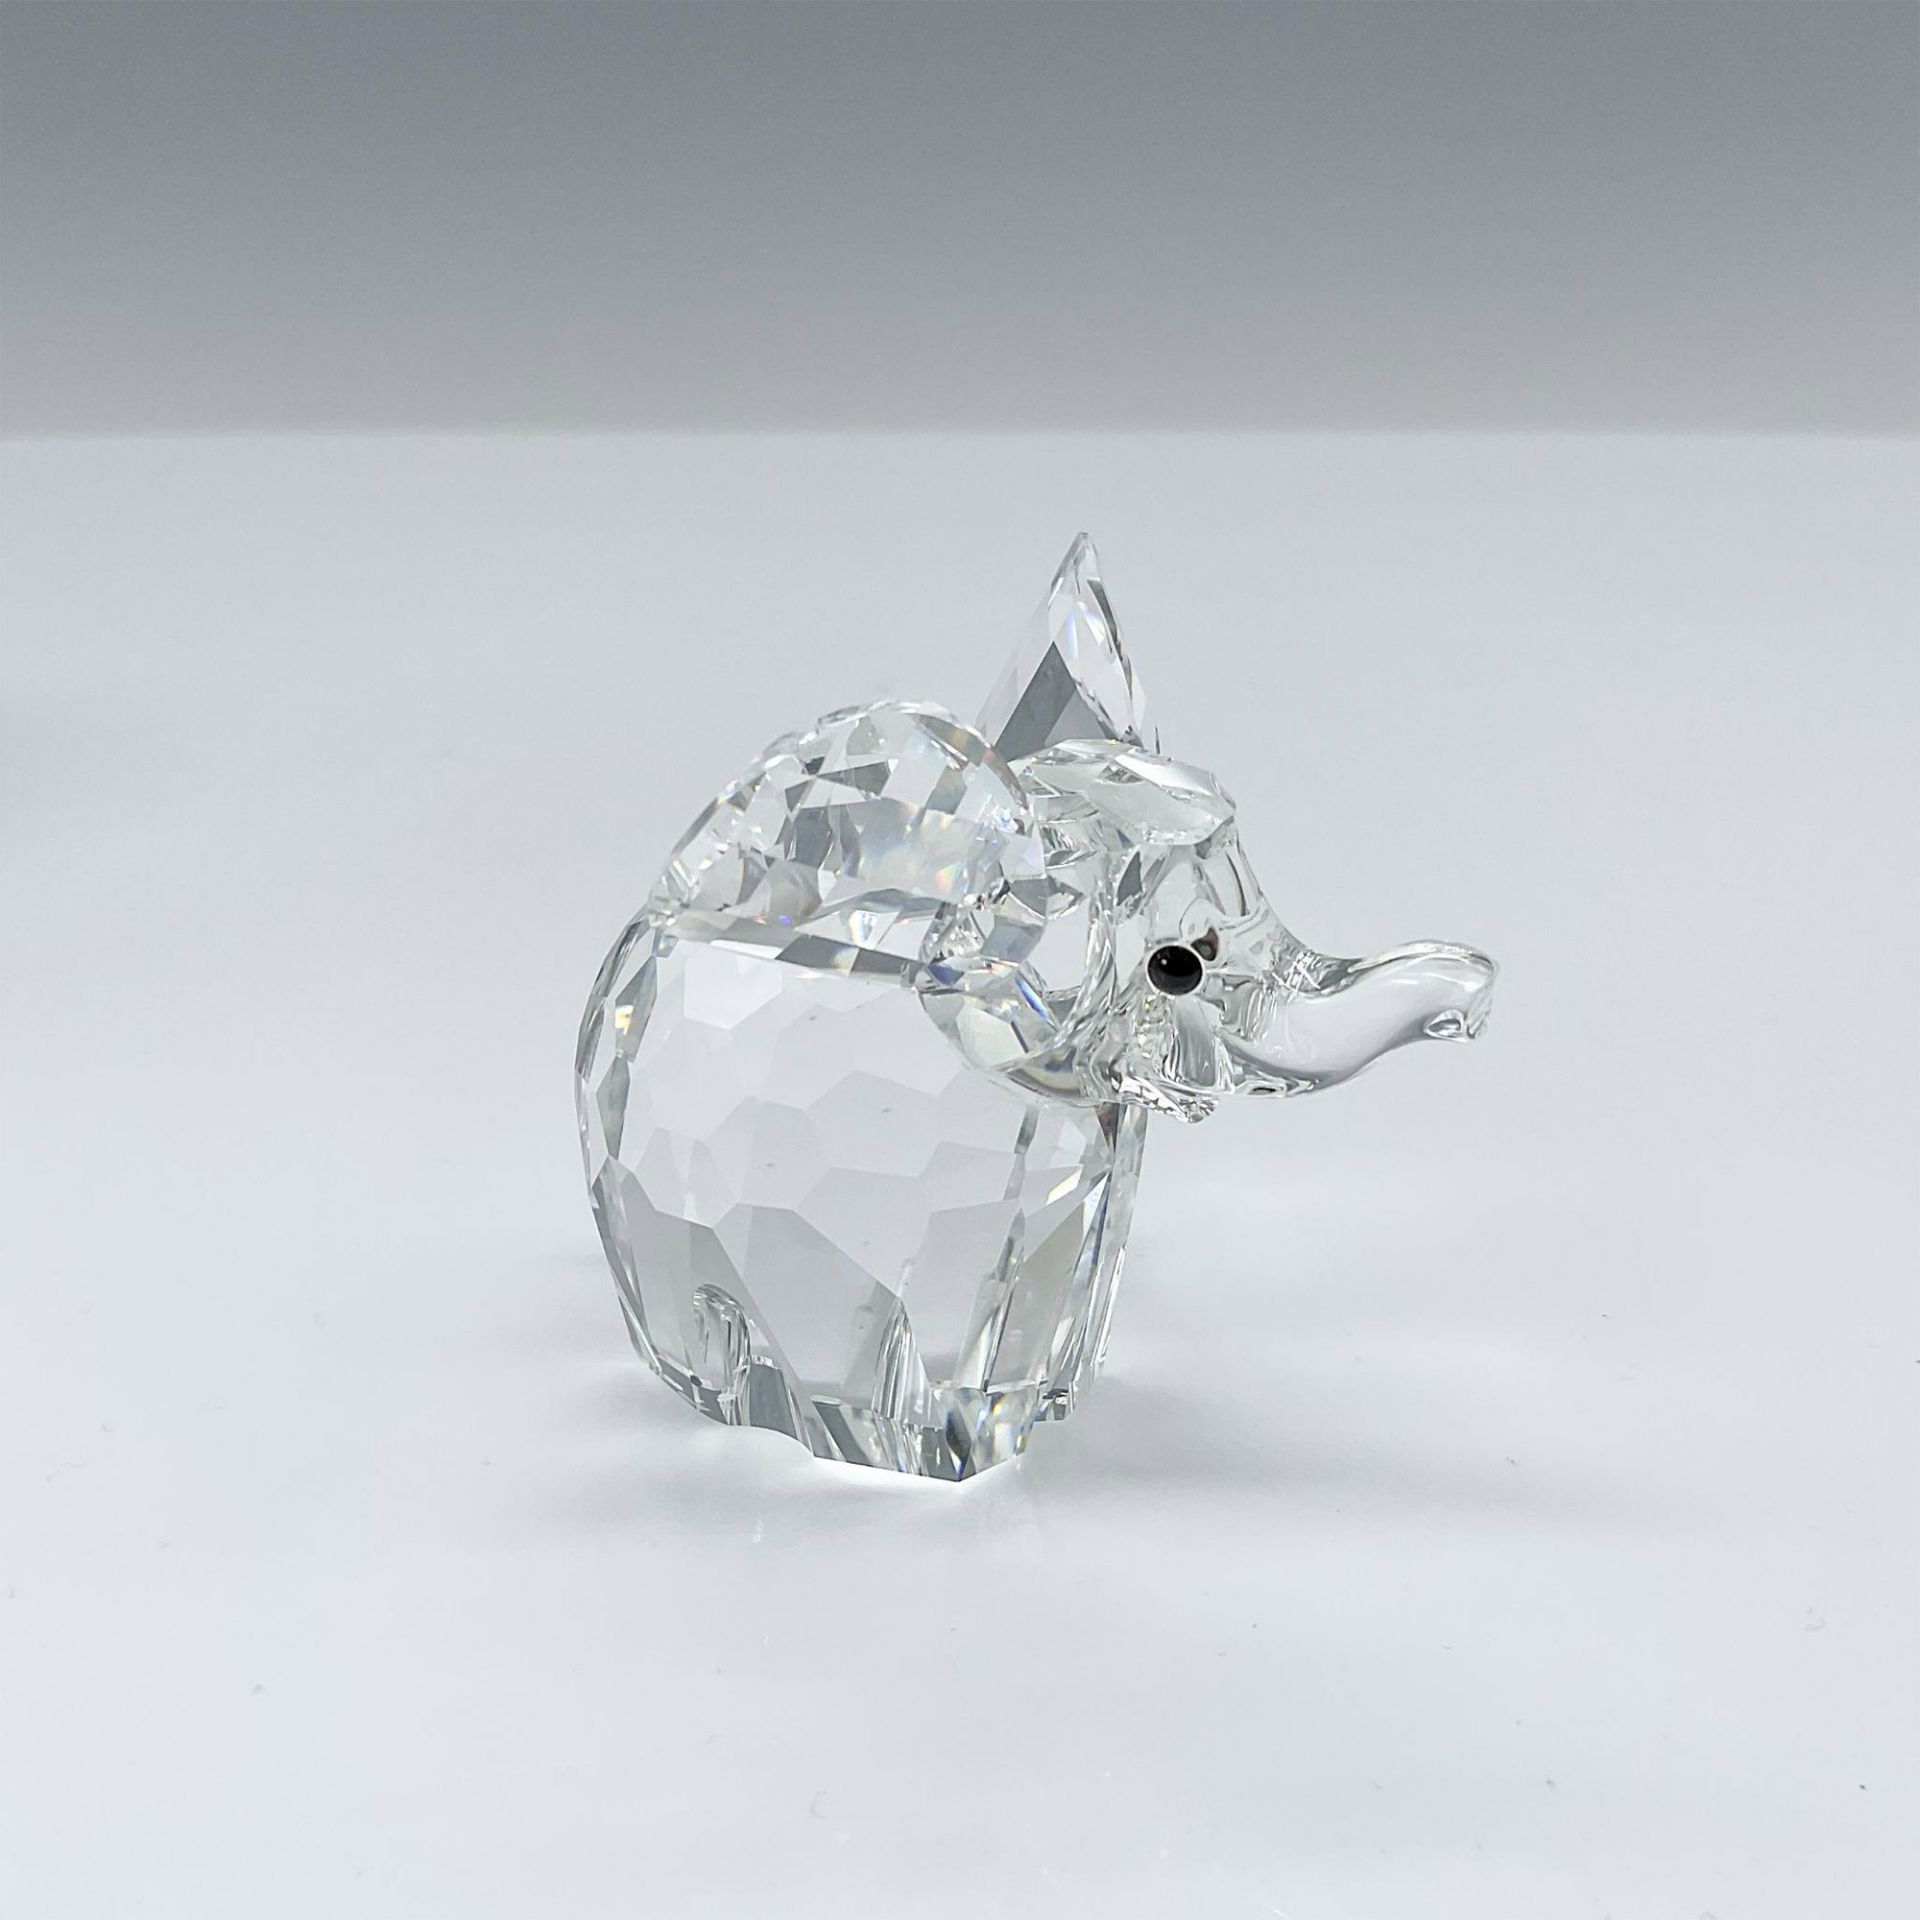 Swarovski Silver Crystal Figurine, Elephant Large - Image 2 of 4